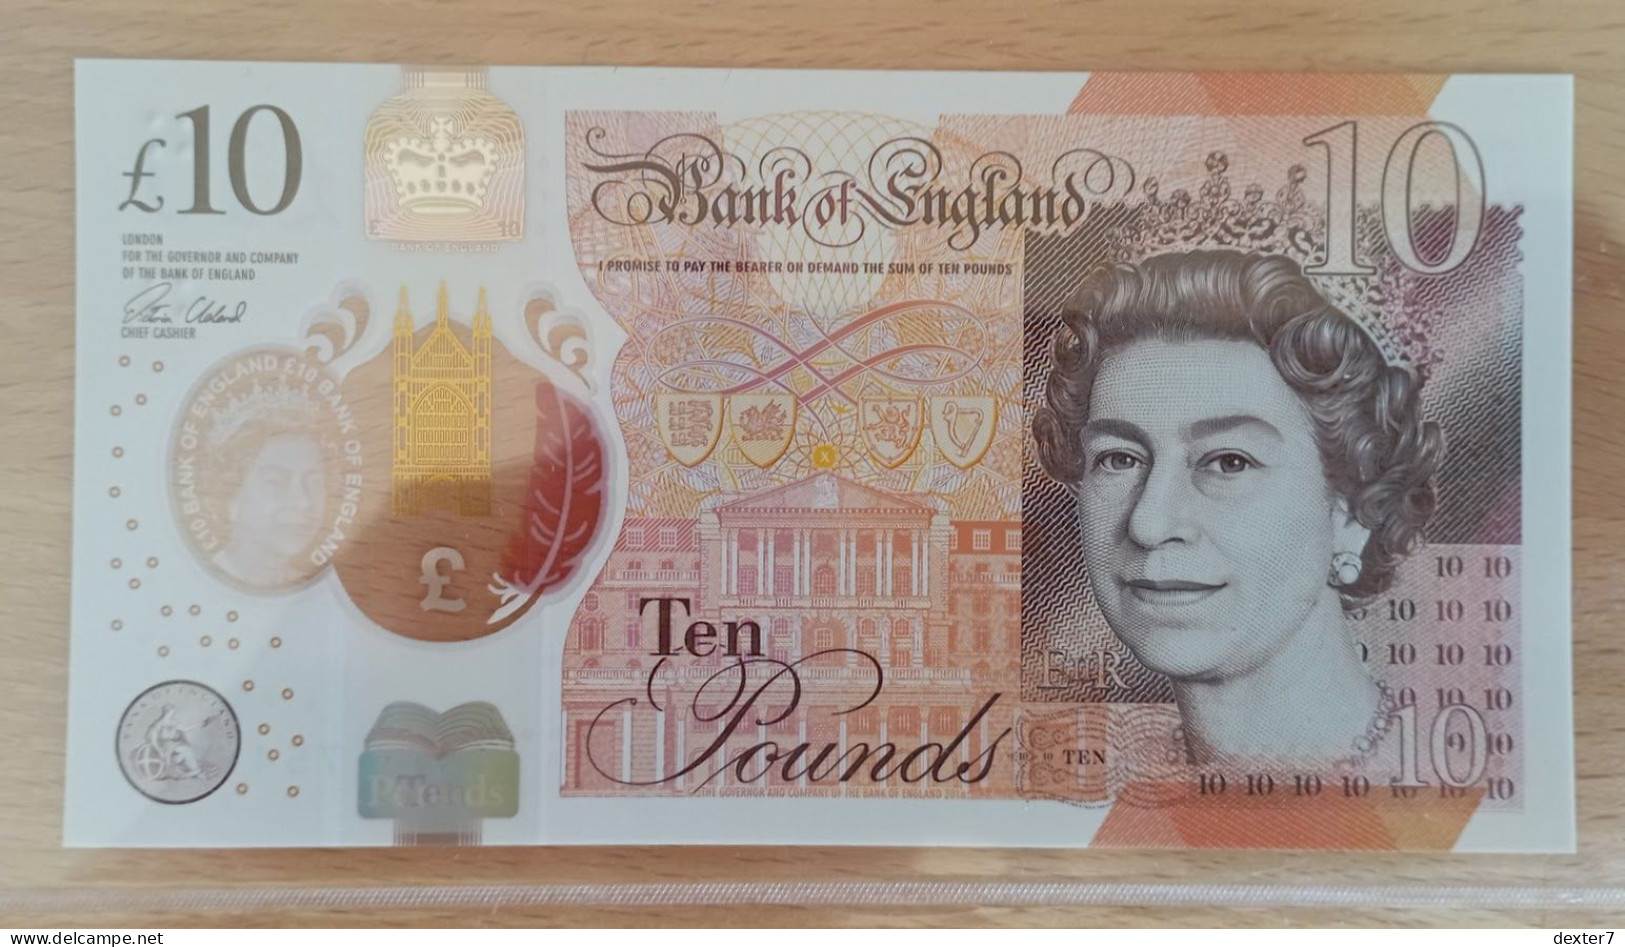 United Kingdom UK GB 5 Pound 2016 UNC Cleland Austen Pounds Polymer - 5 Pounds